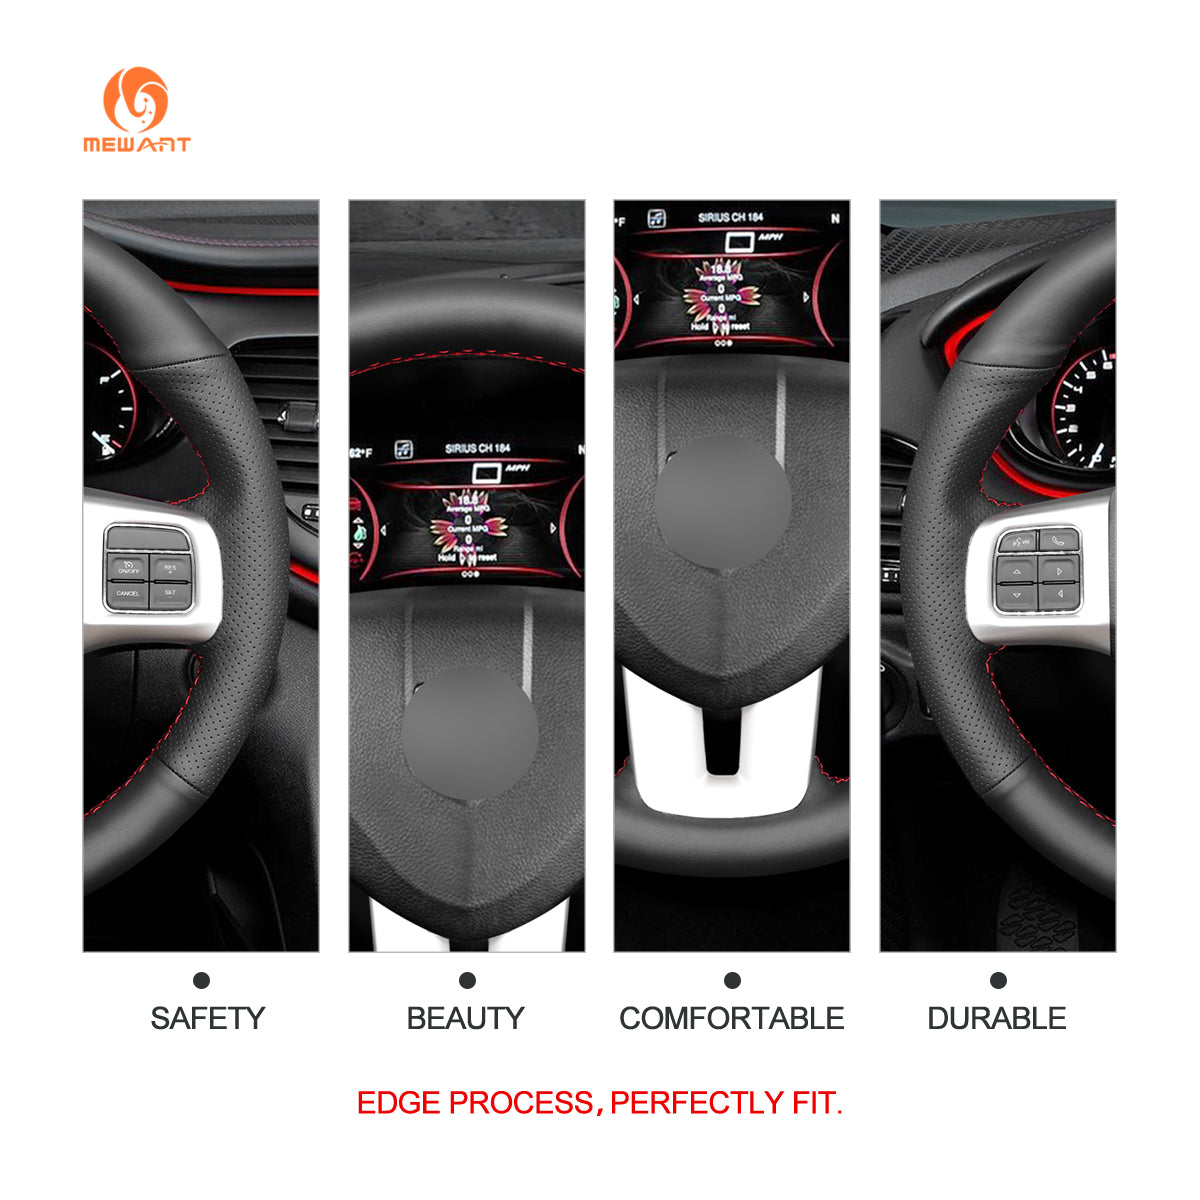 MEWANT Black Leather Car Steering Wheel Cover for Dodge Dart 2013-2016 / for Volkswagen VW Routan 2011-2012